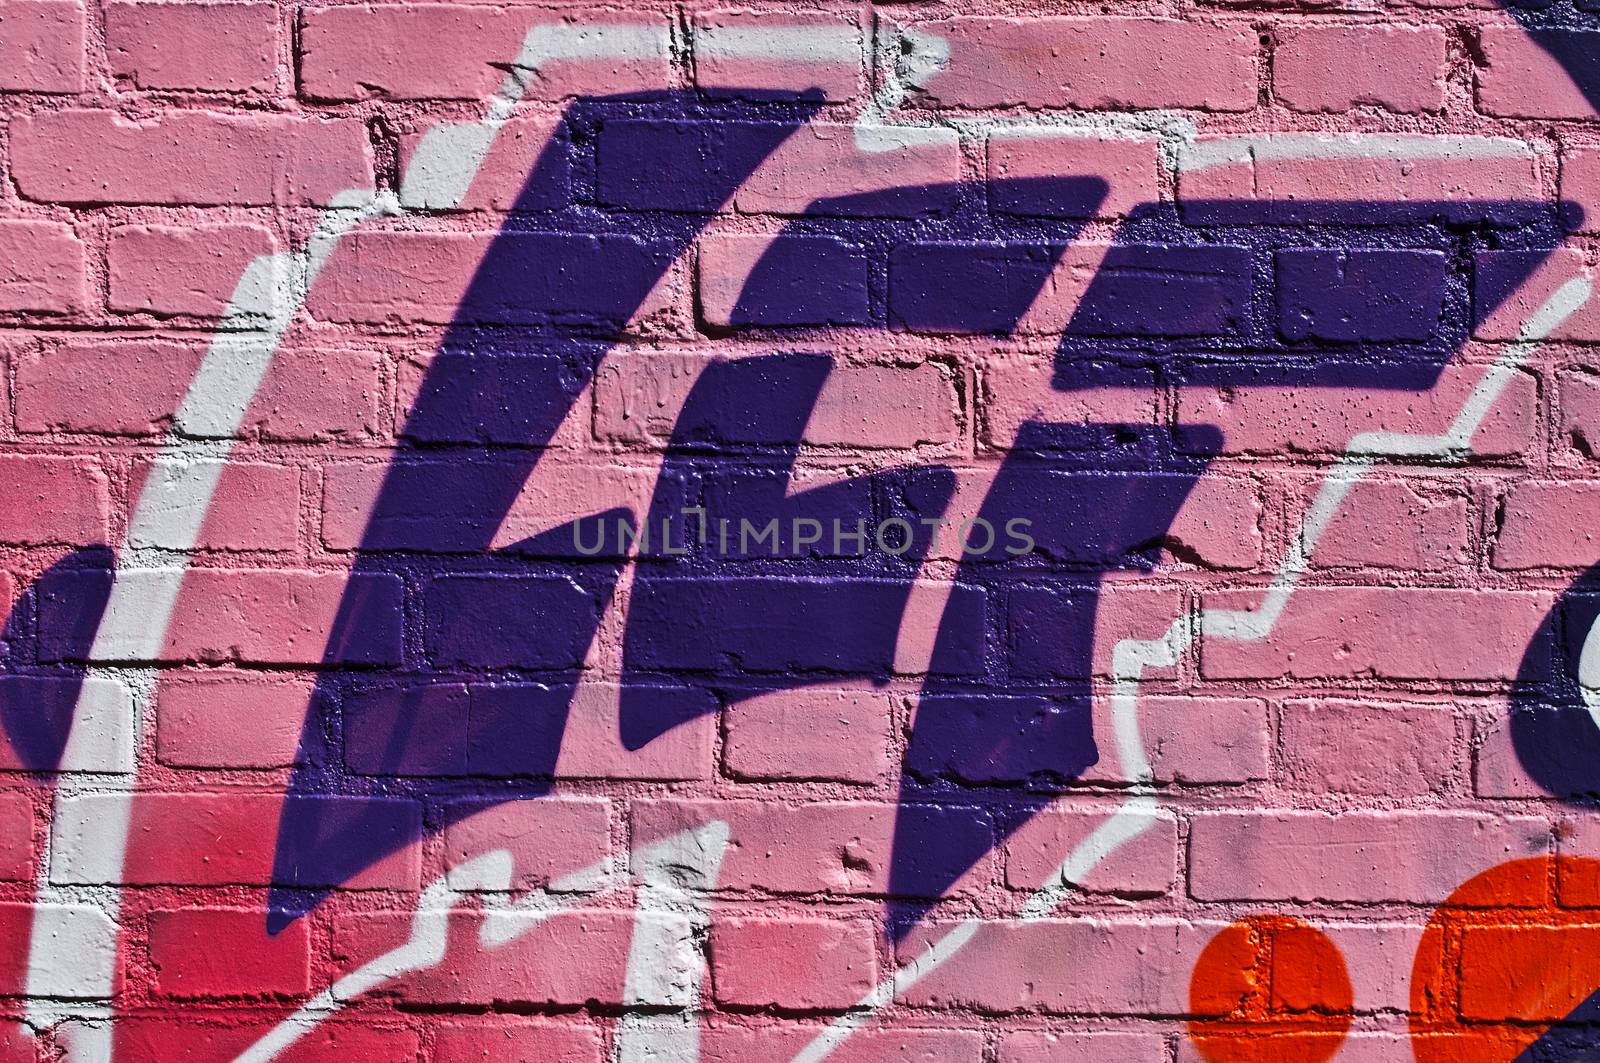 abstract graffiti on brick background by NeydtStock